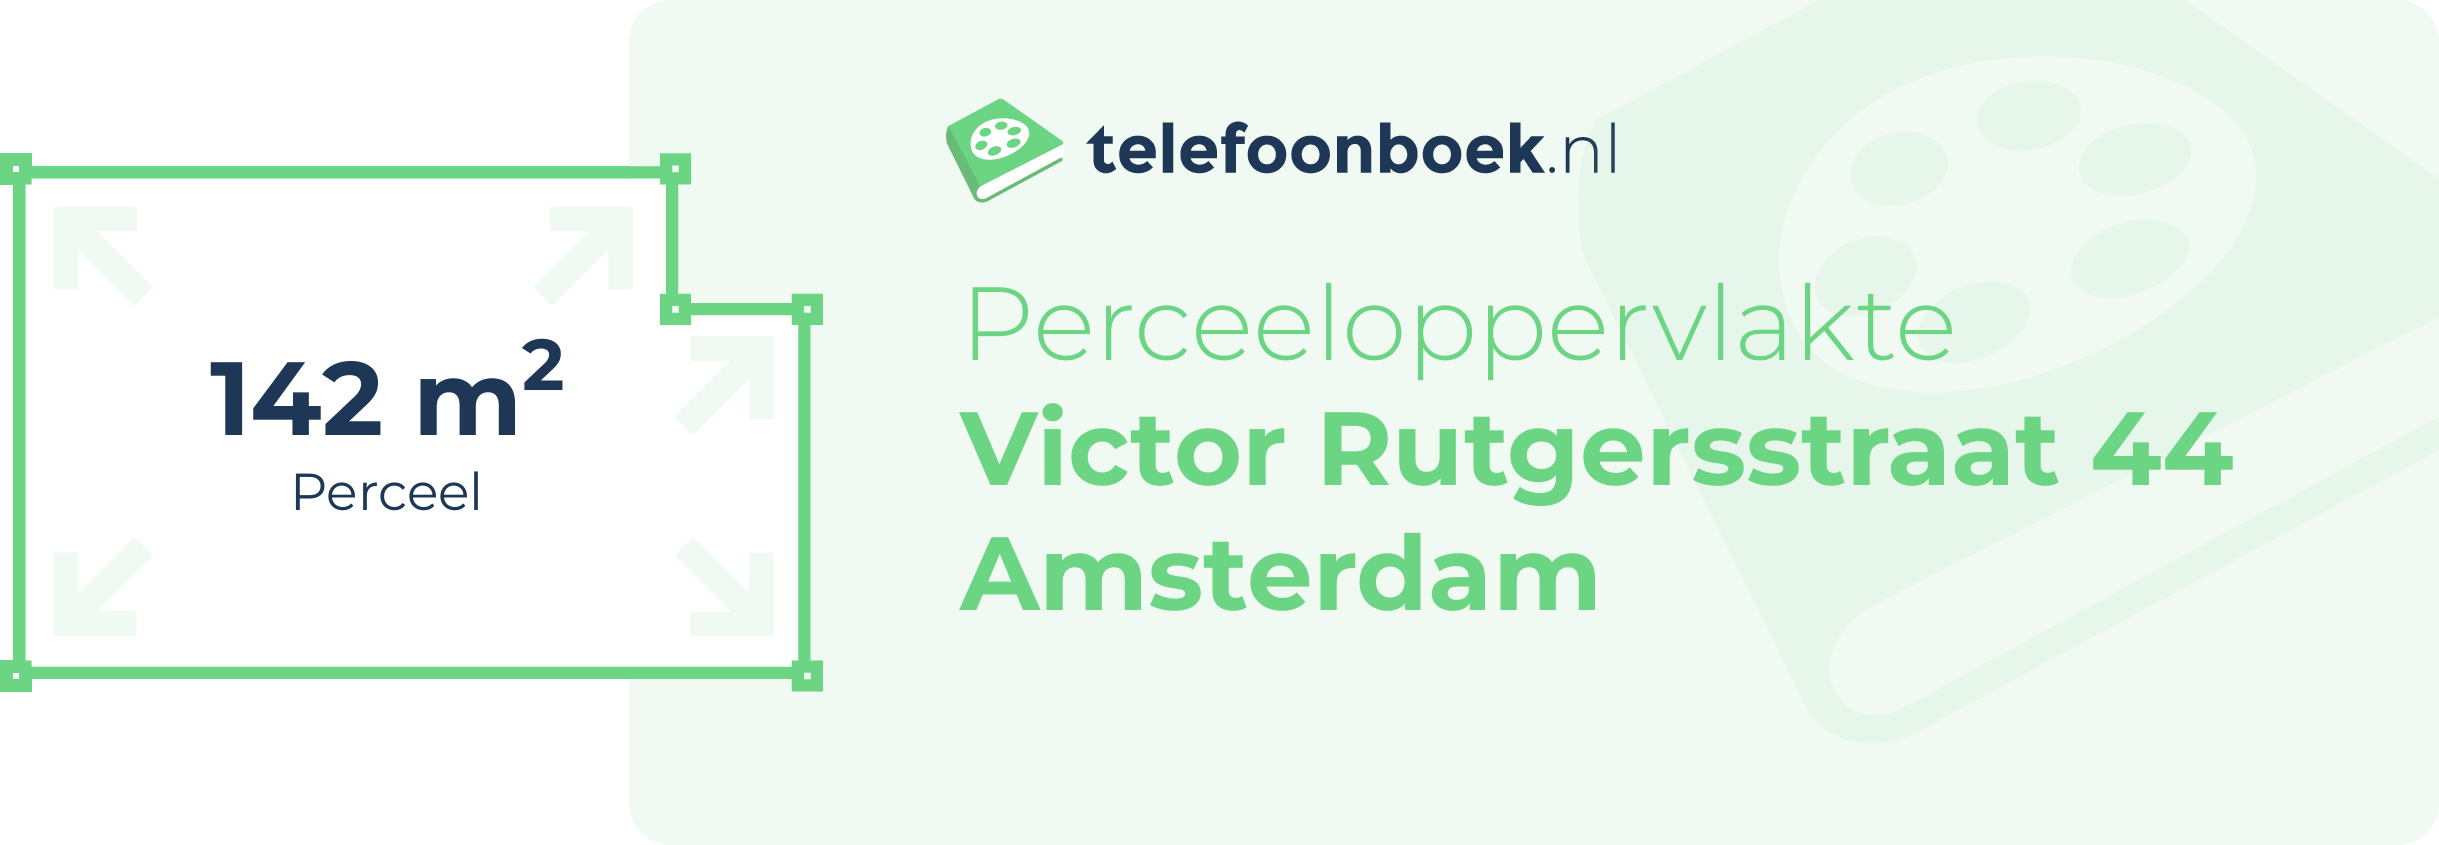 Perceeloppervlakte Victor Rutgersstraat 44 Amsterdam